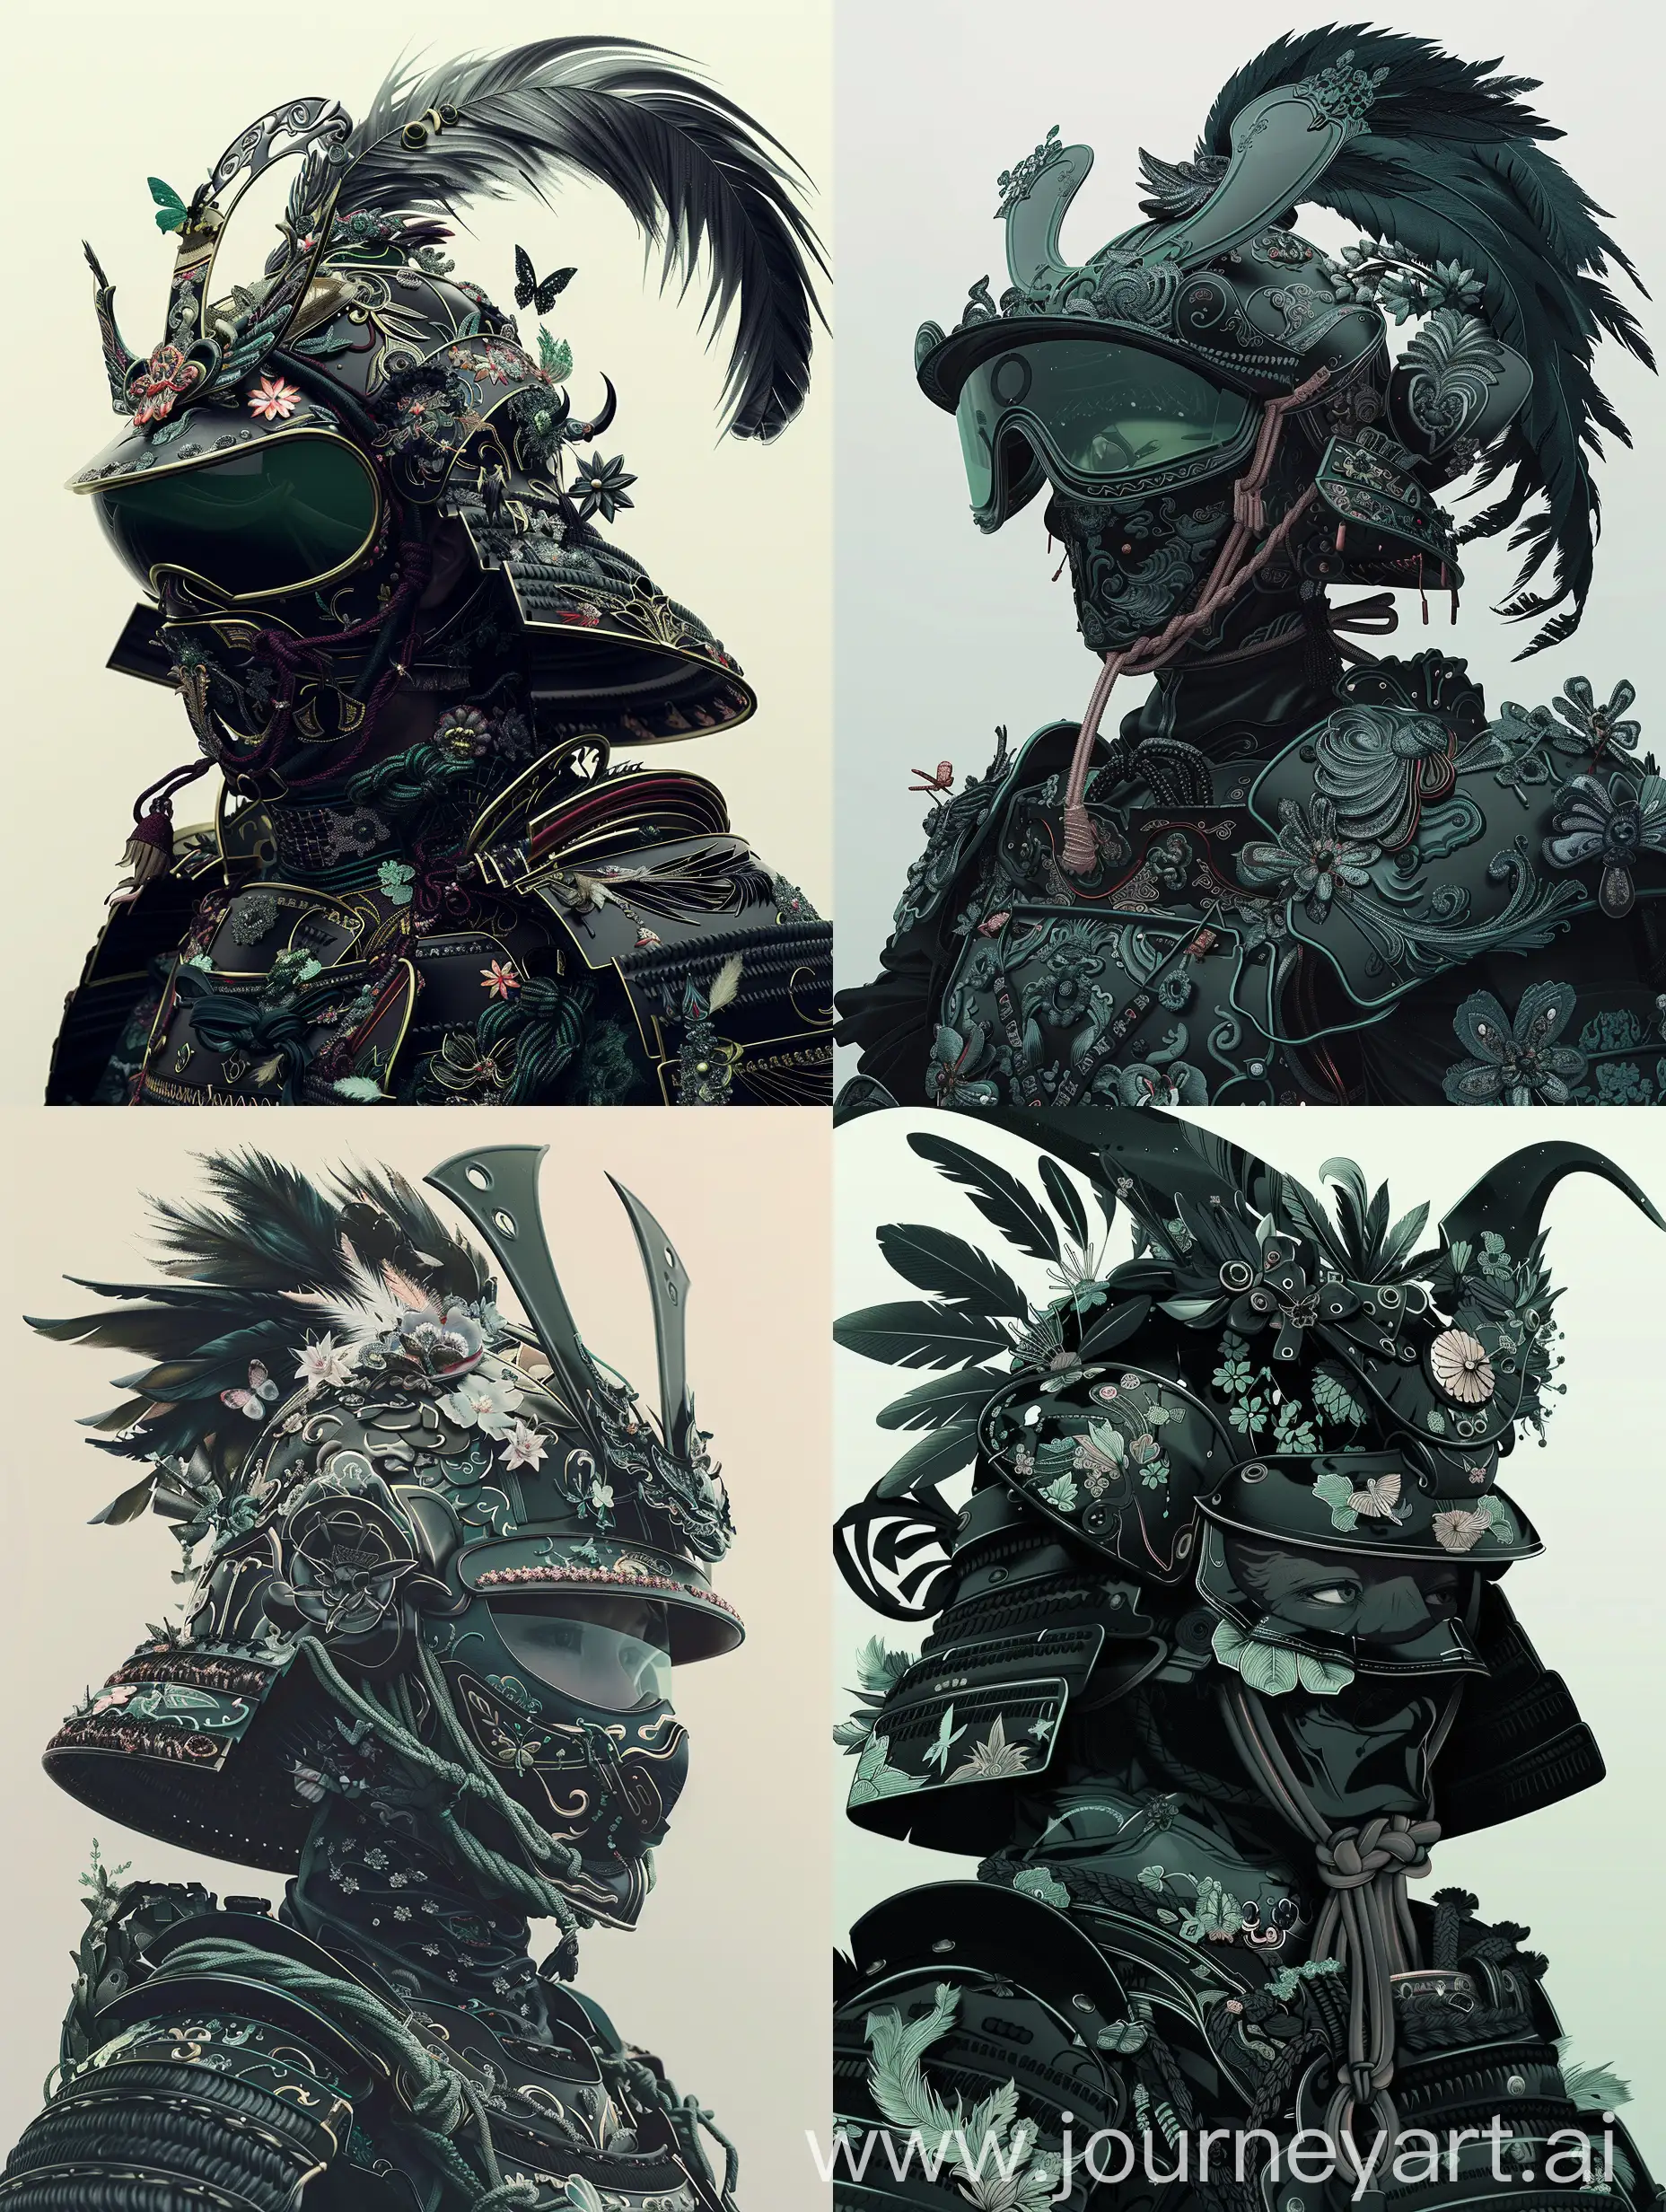 Elaborate-Black-Samurai-Warrior-in-Ornate-Armor-with-Green-Accents